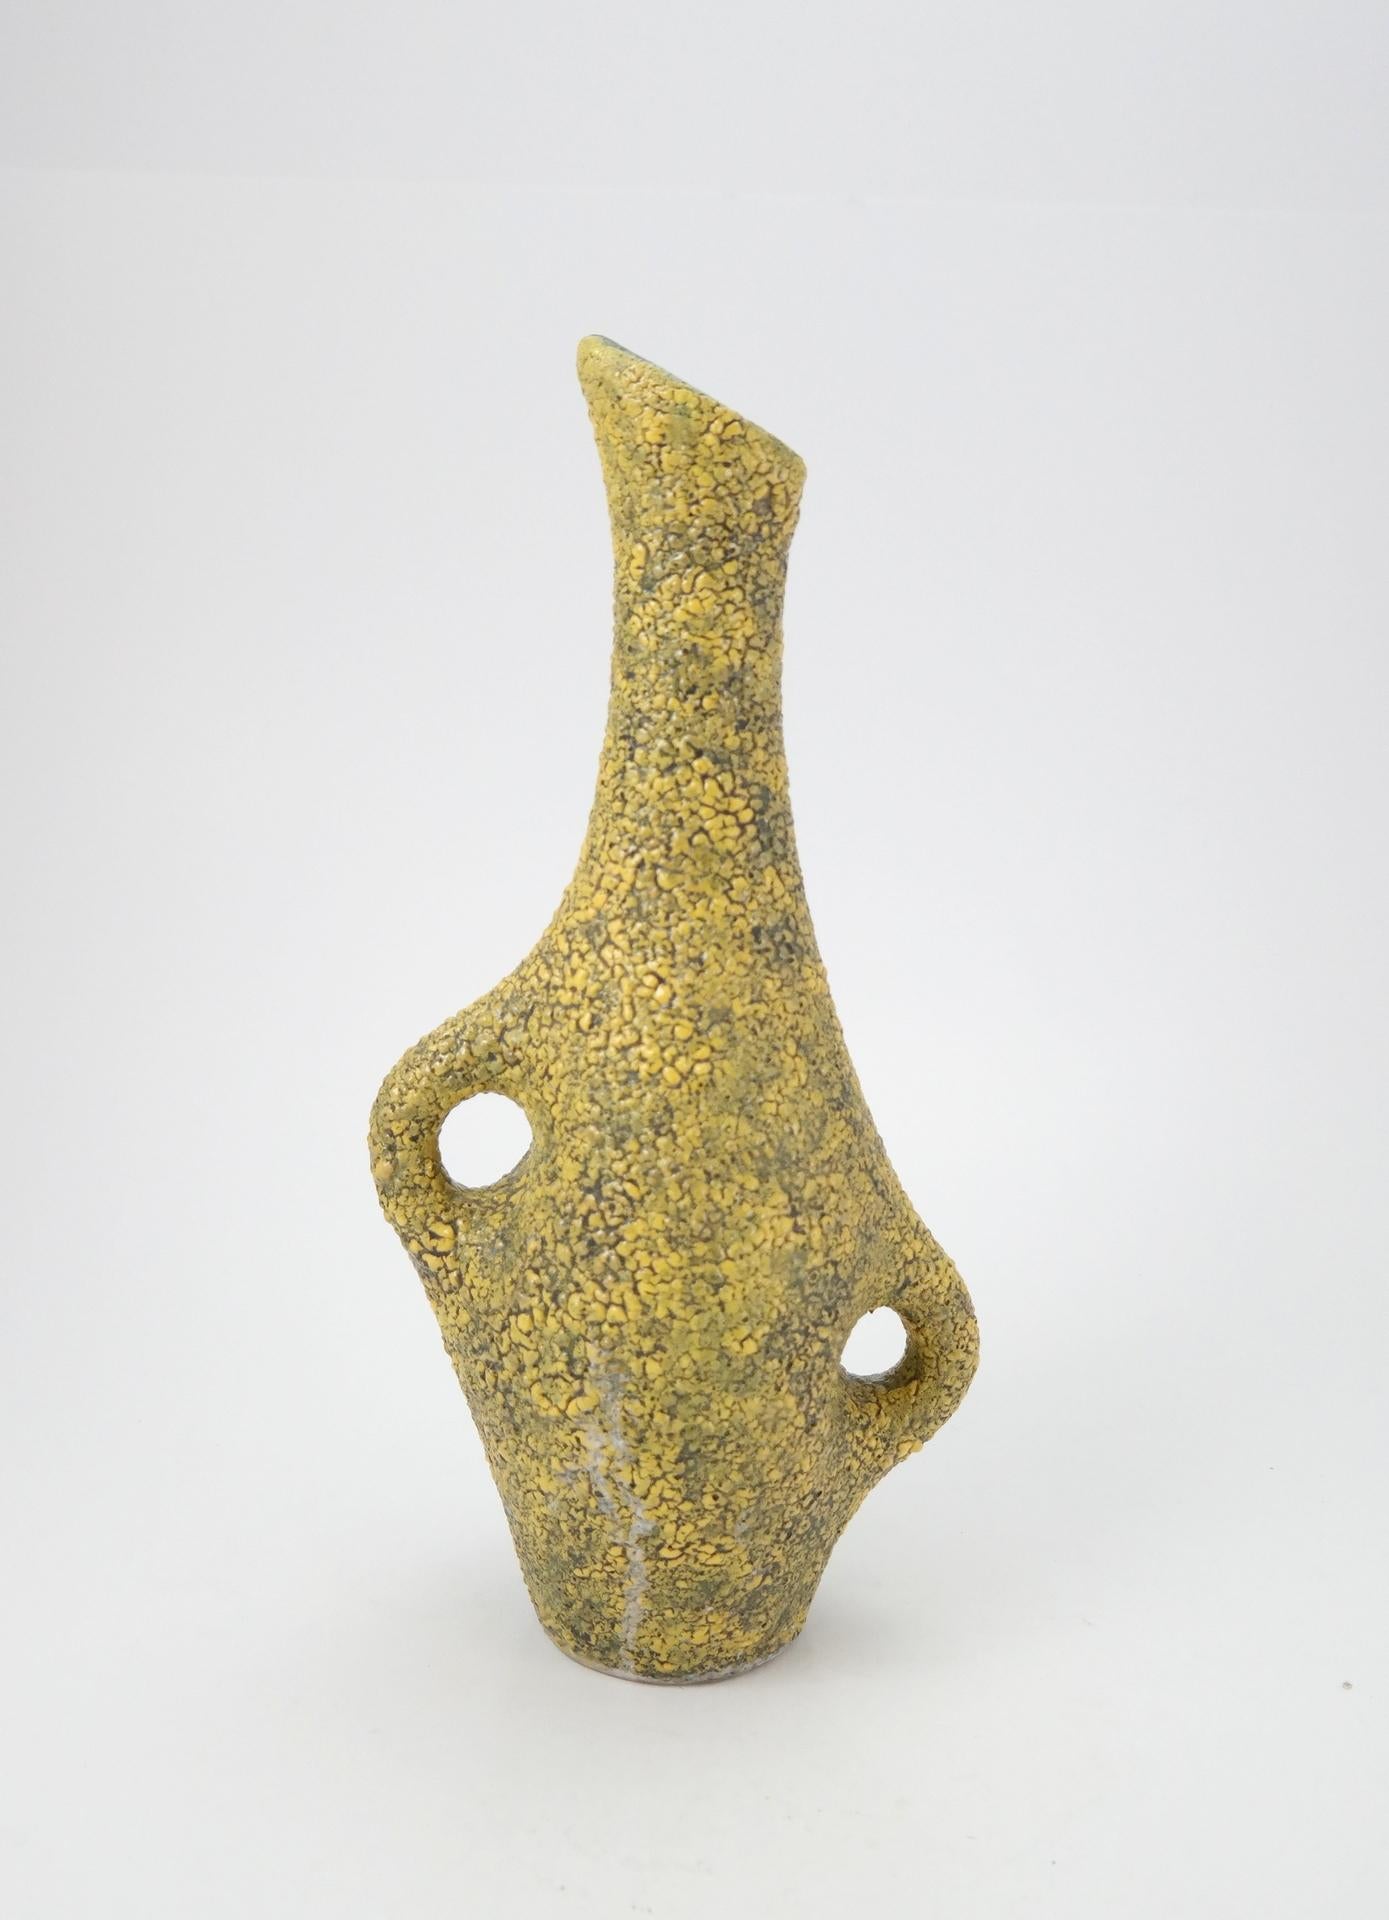 Midcentury ceramic vase with Cortina cracked glaze, 1960s.